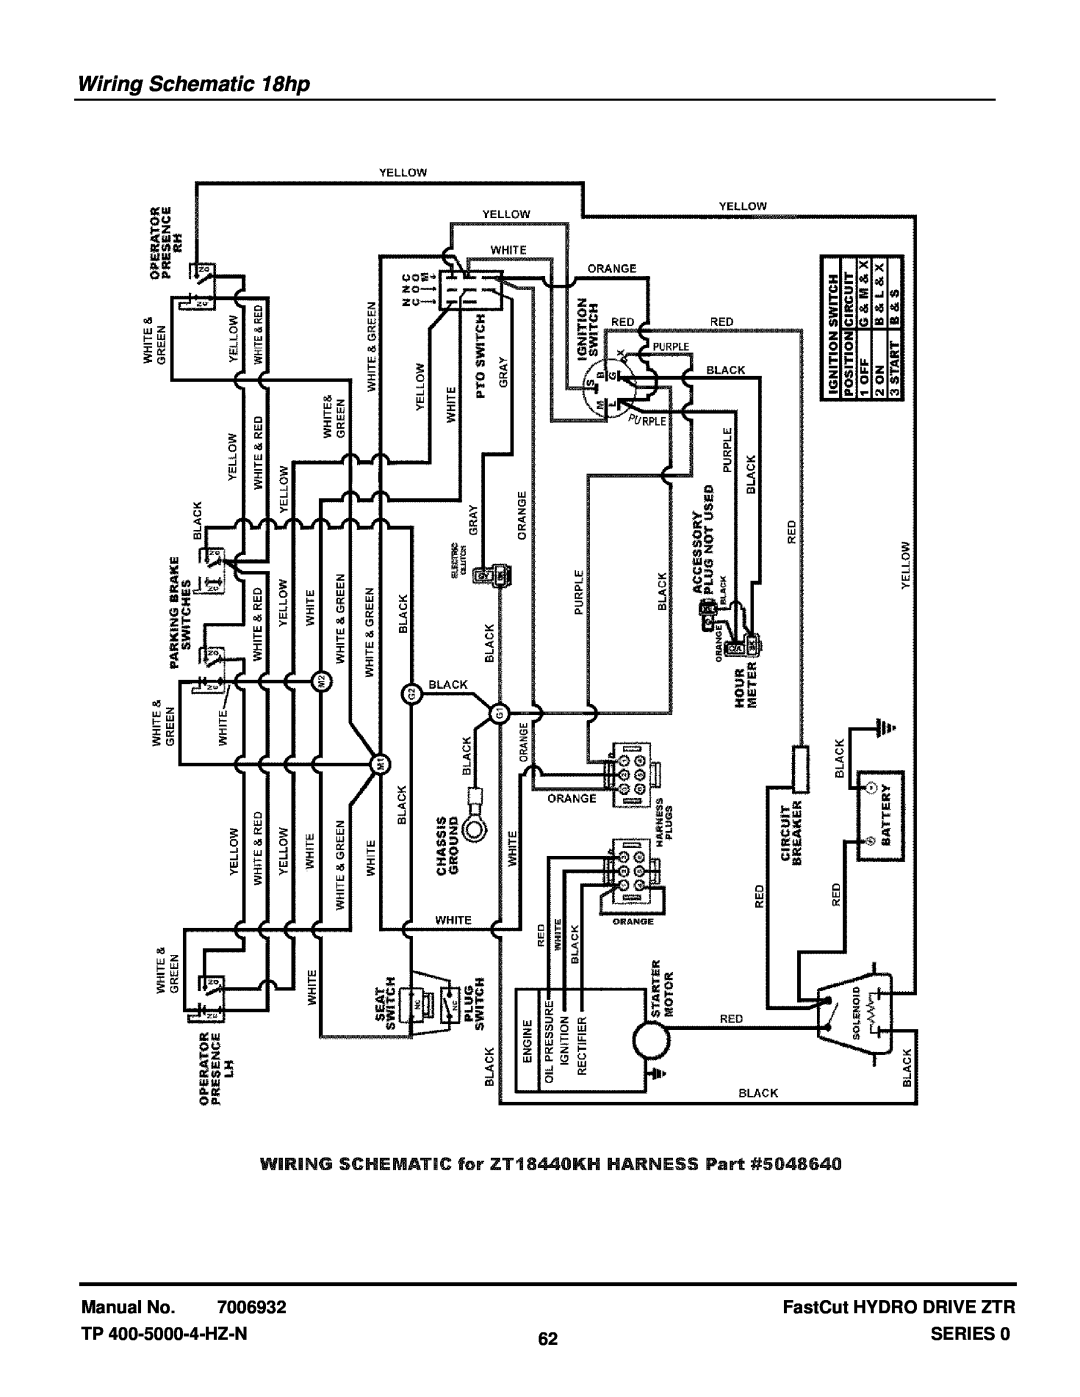 Snapper ZT18440KH manual Wiring Schematic 18hp, Manual No, 7006932, FastCut HYDRO DRIVE ZTR, TP 400-5000-4-HZ-N, Series 